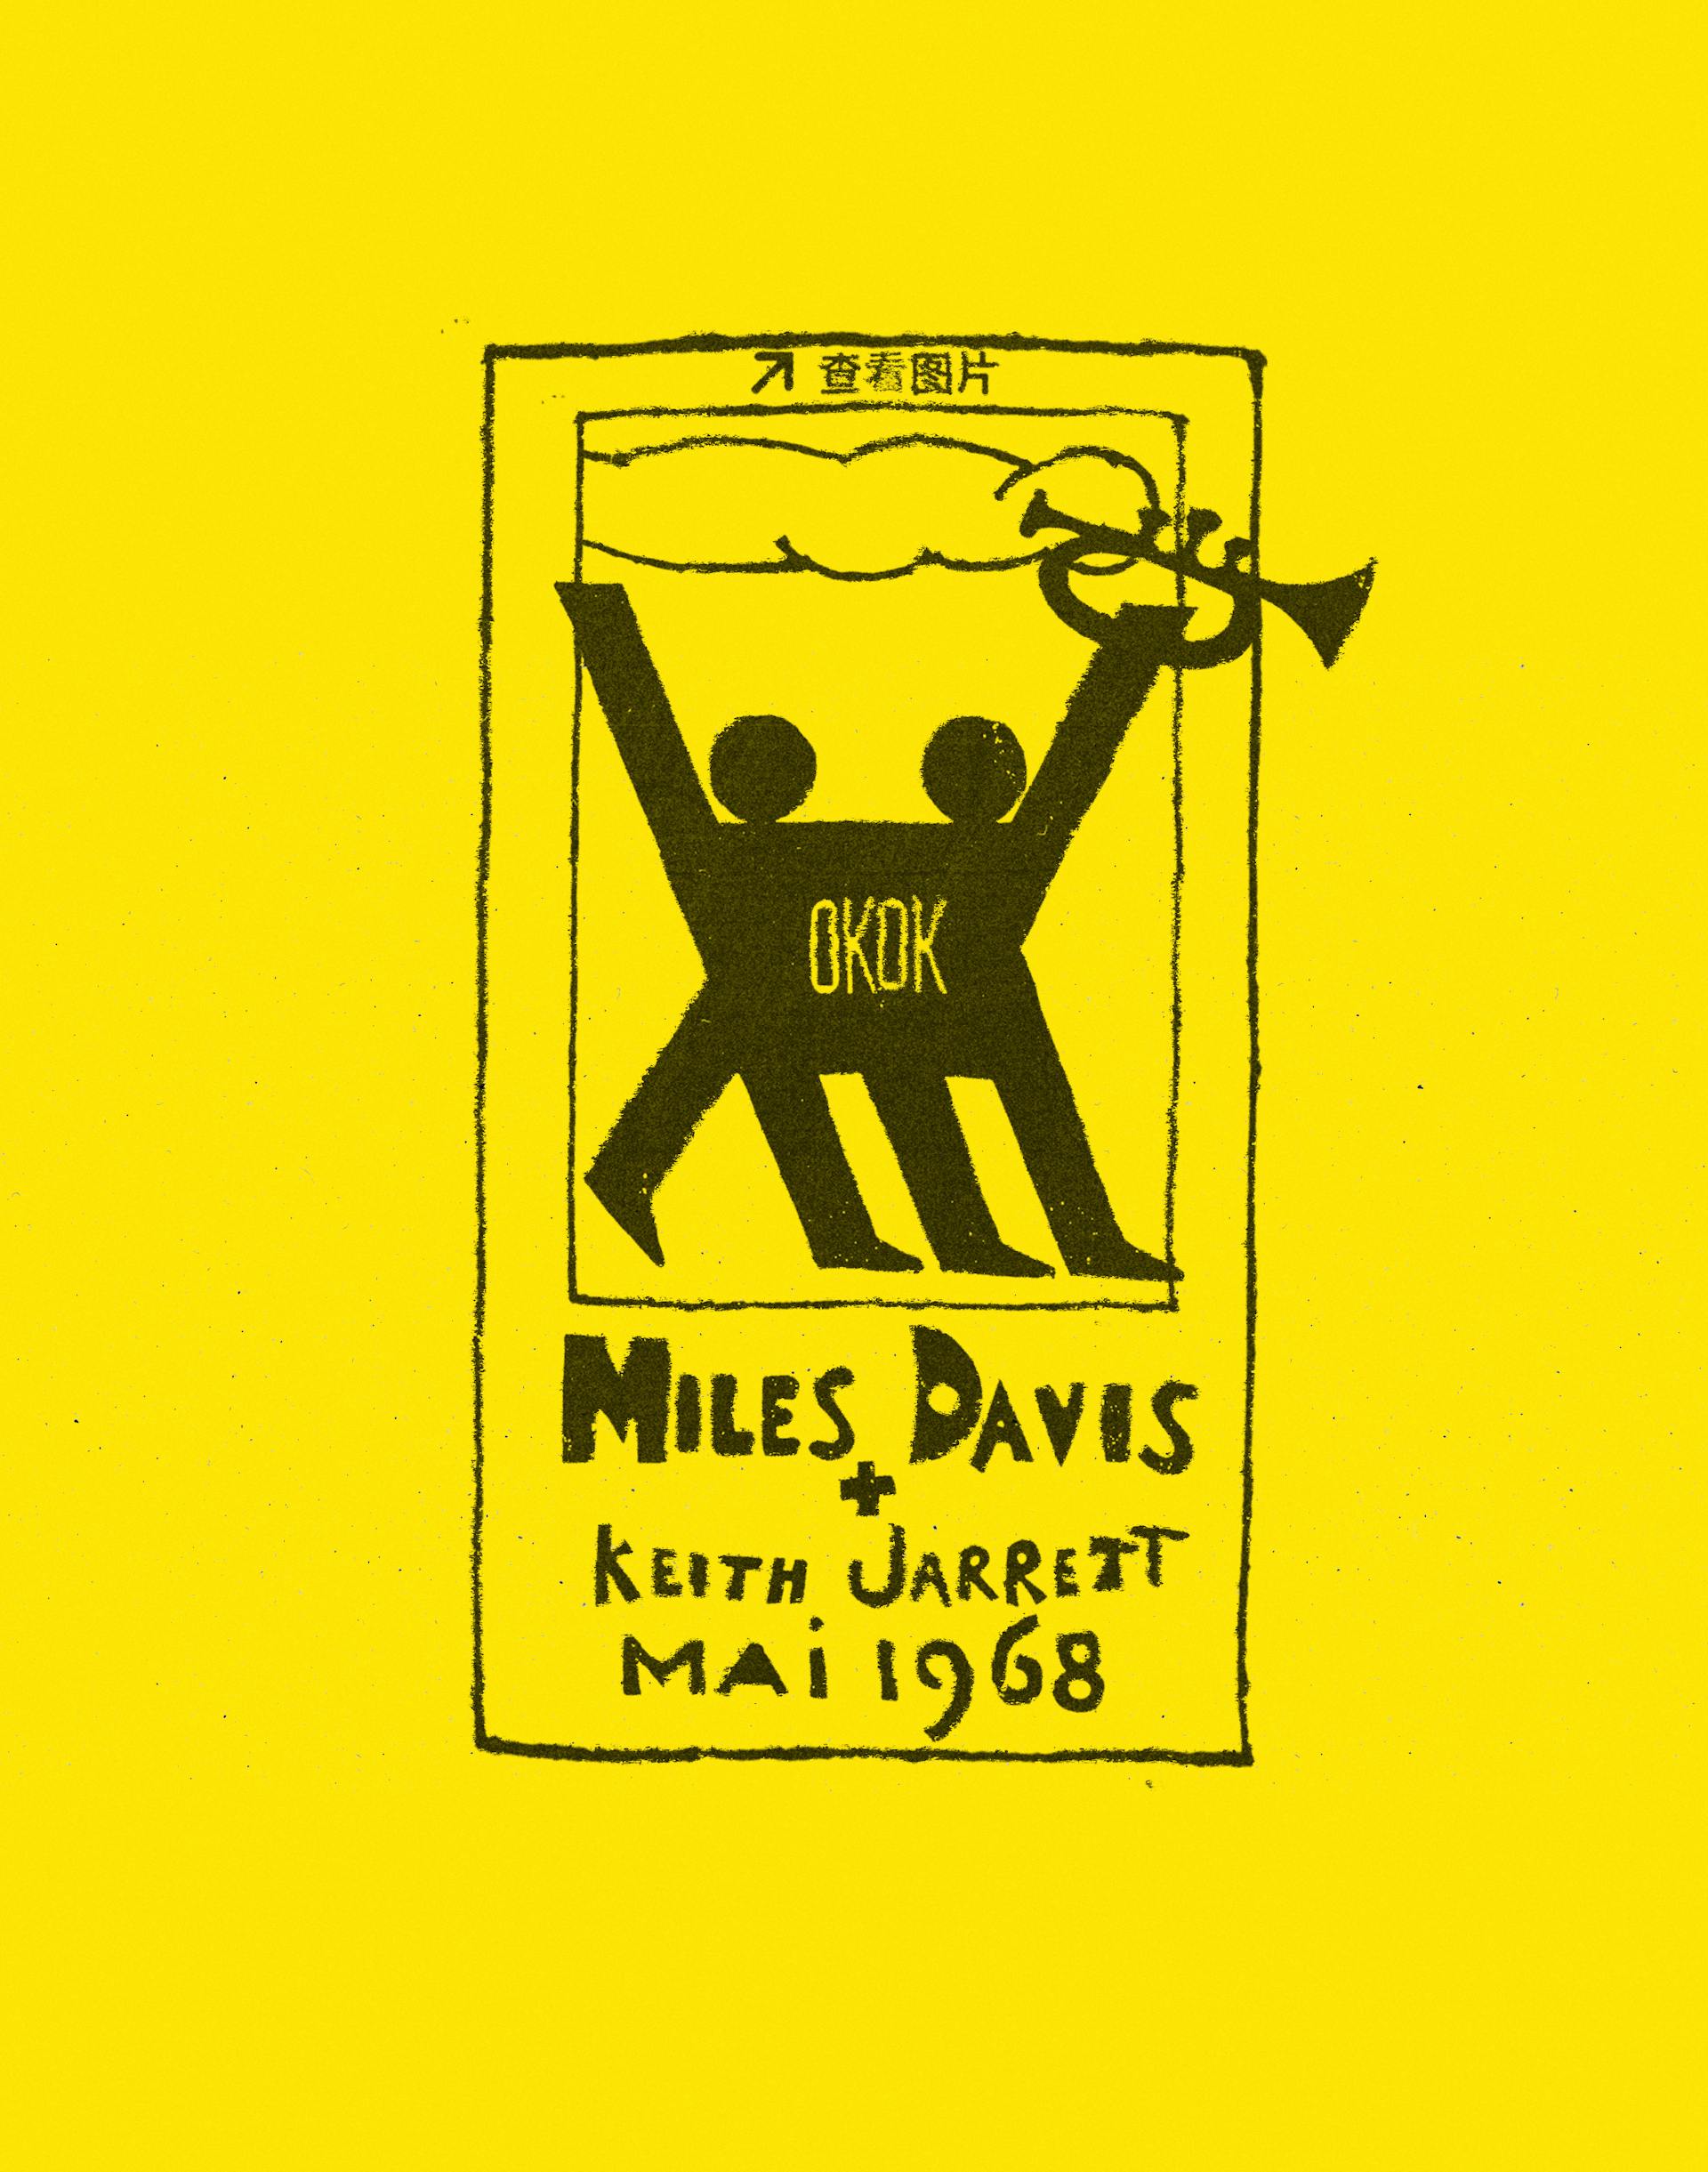 MILES DAVIS & KEITH JARRETT